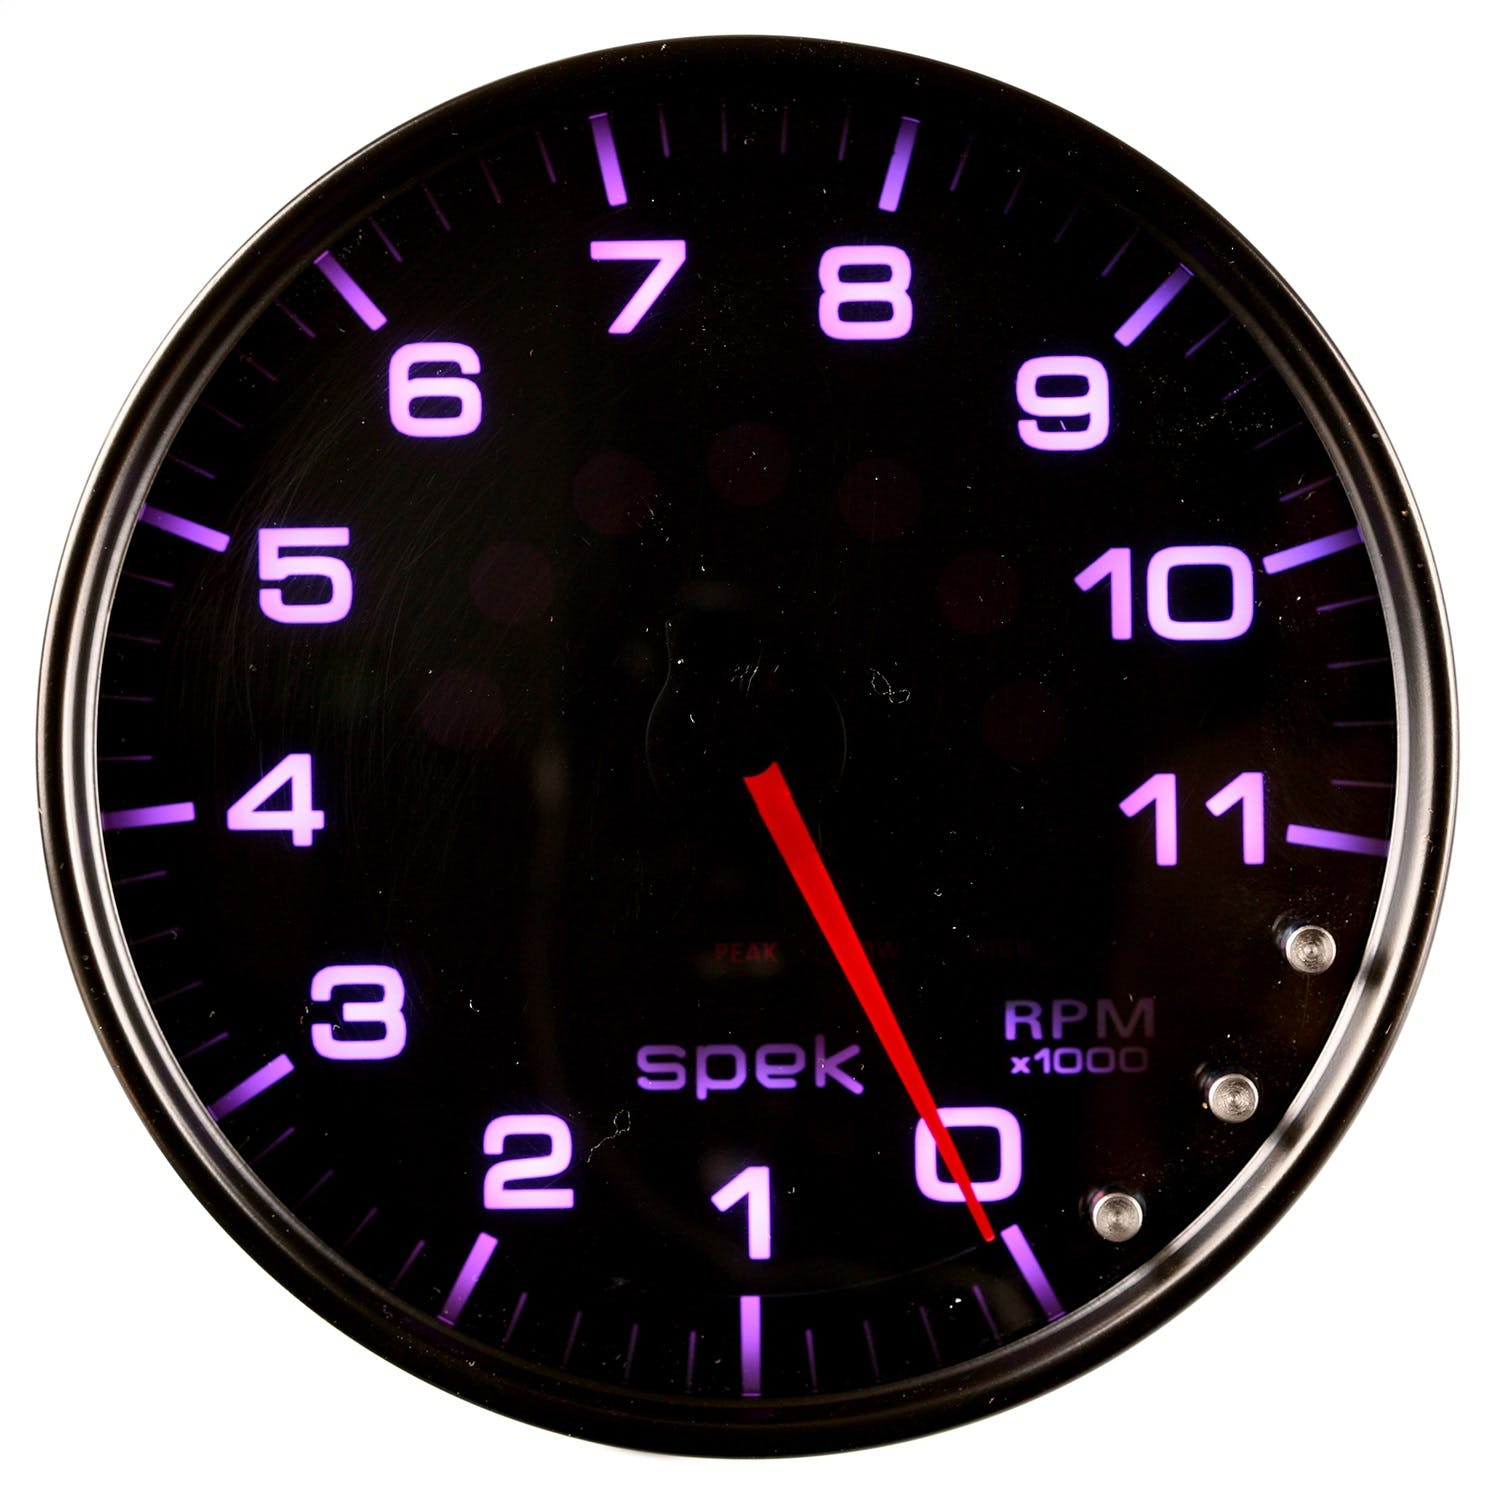 AutoMeter Products P23952 Spek Pro Tachometer Gauge, 5, 11K RPM, with Shift Light Black/Smoke/Black